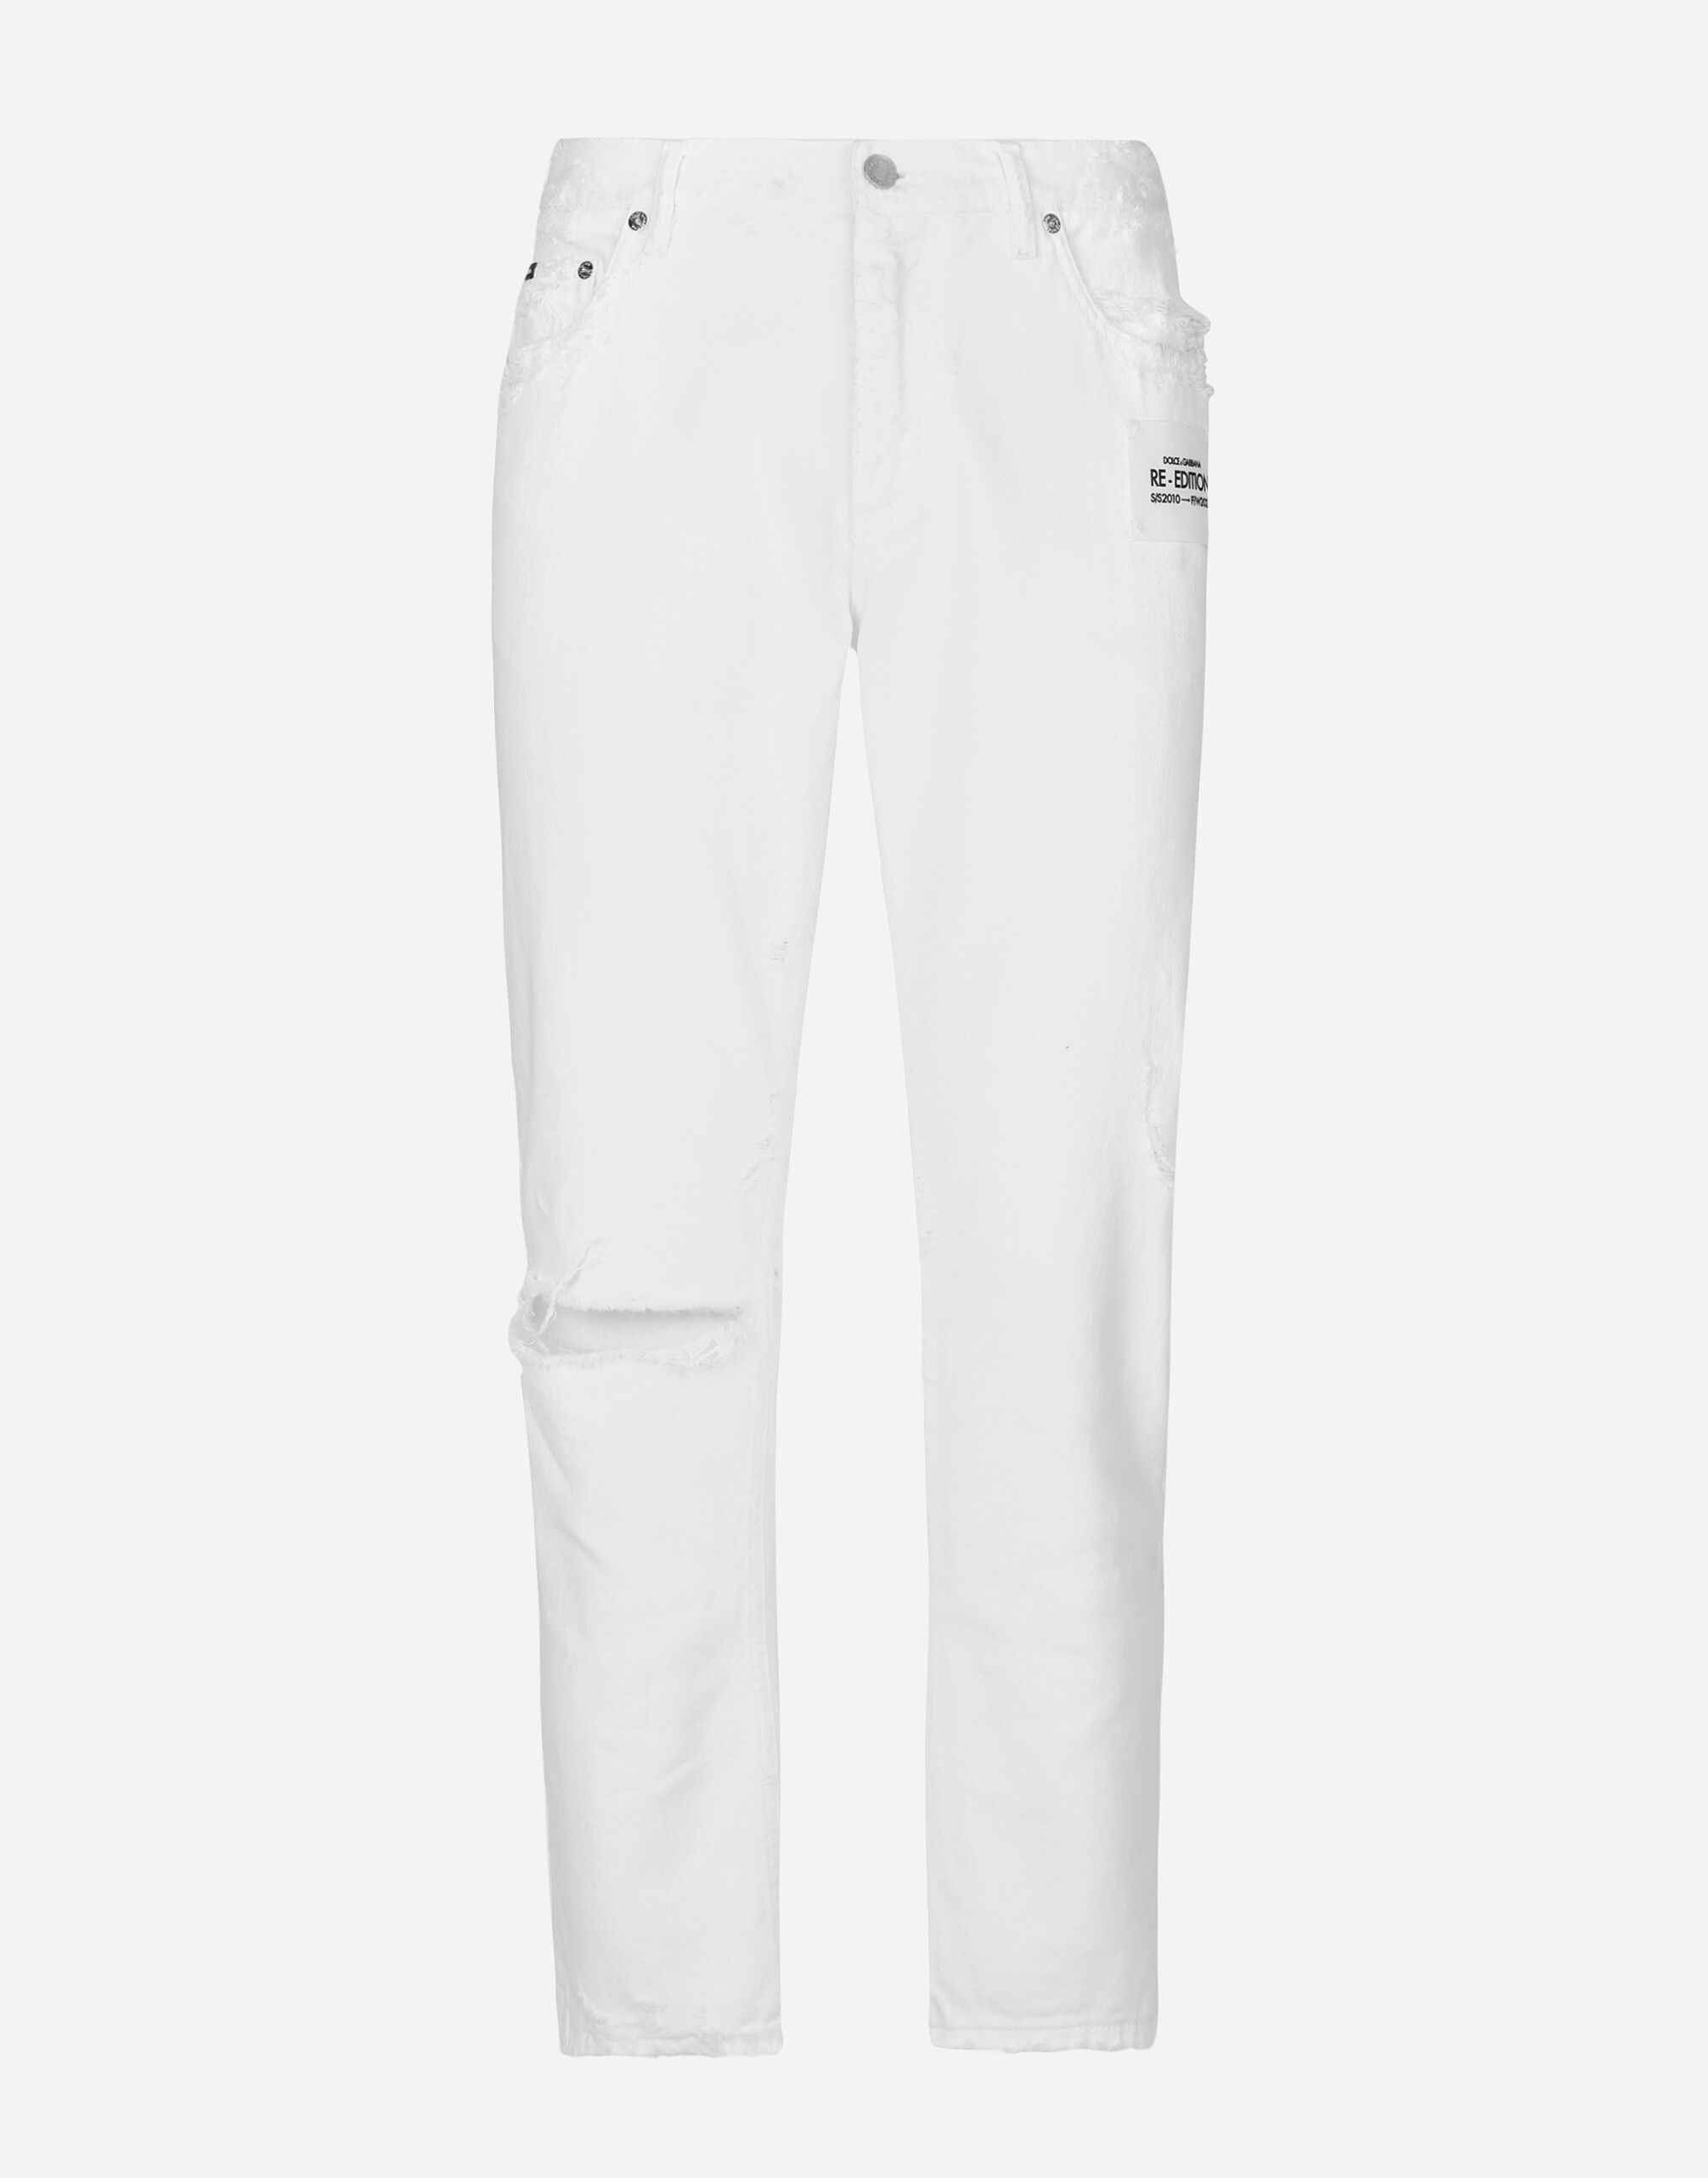 Dolce & Gabbana جينز أبيض فضفاض بتفاصيل ممزقة وكشوط متعدد الألوان G9NL5DG8GW9